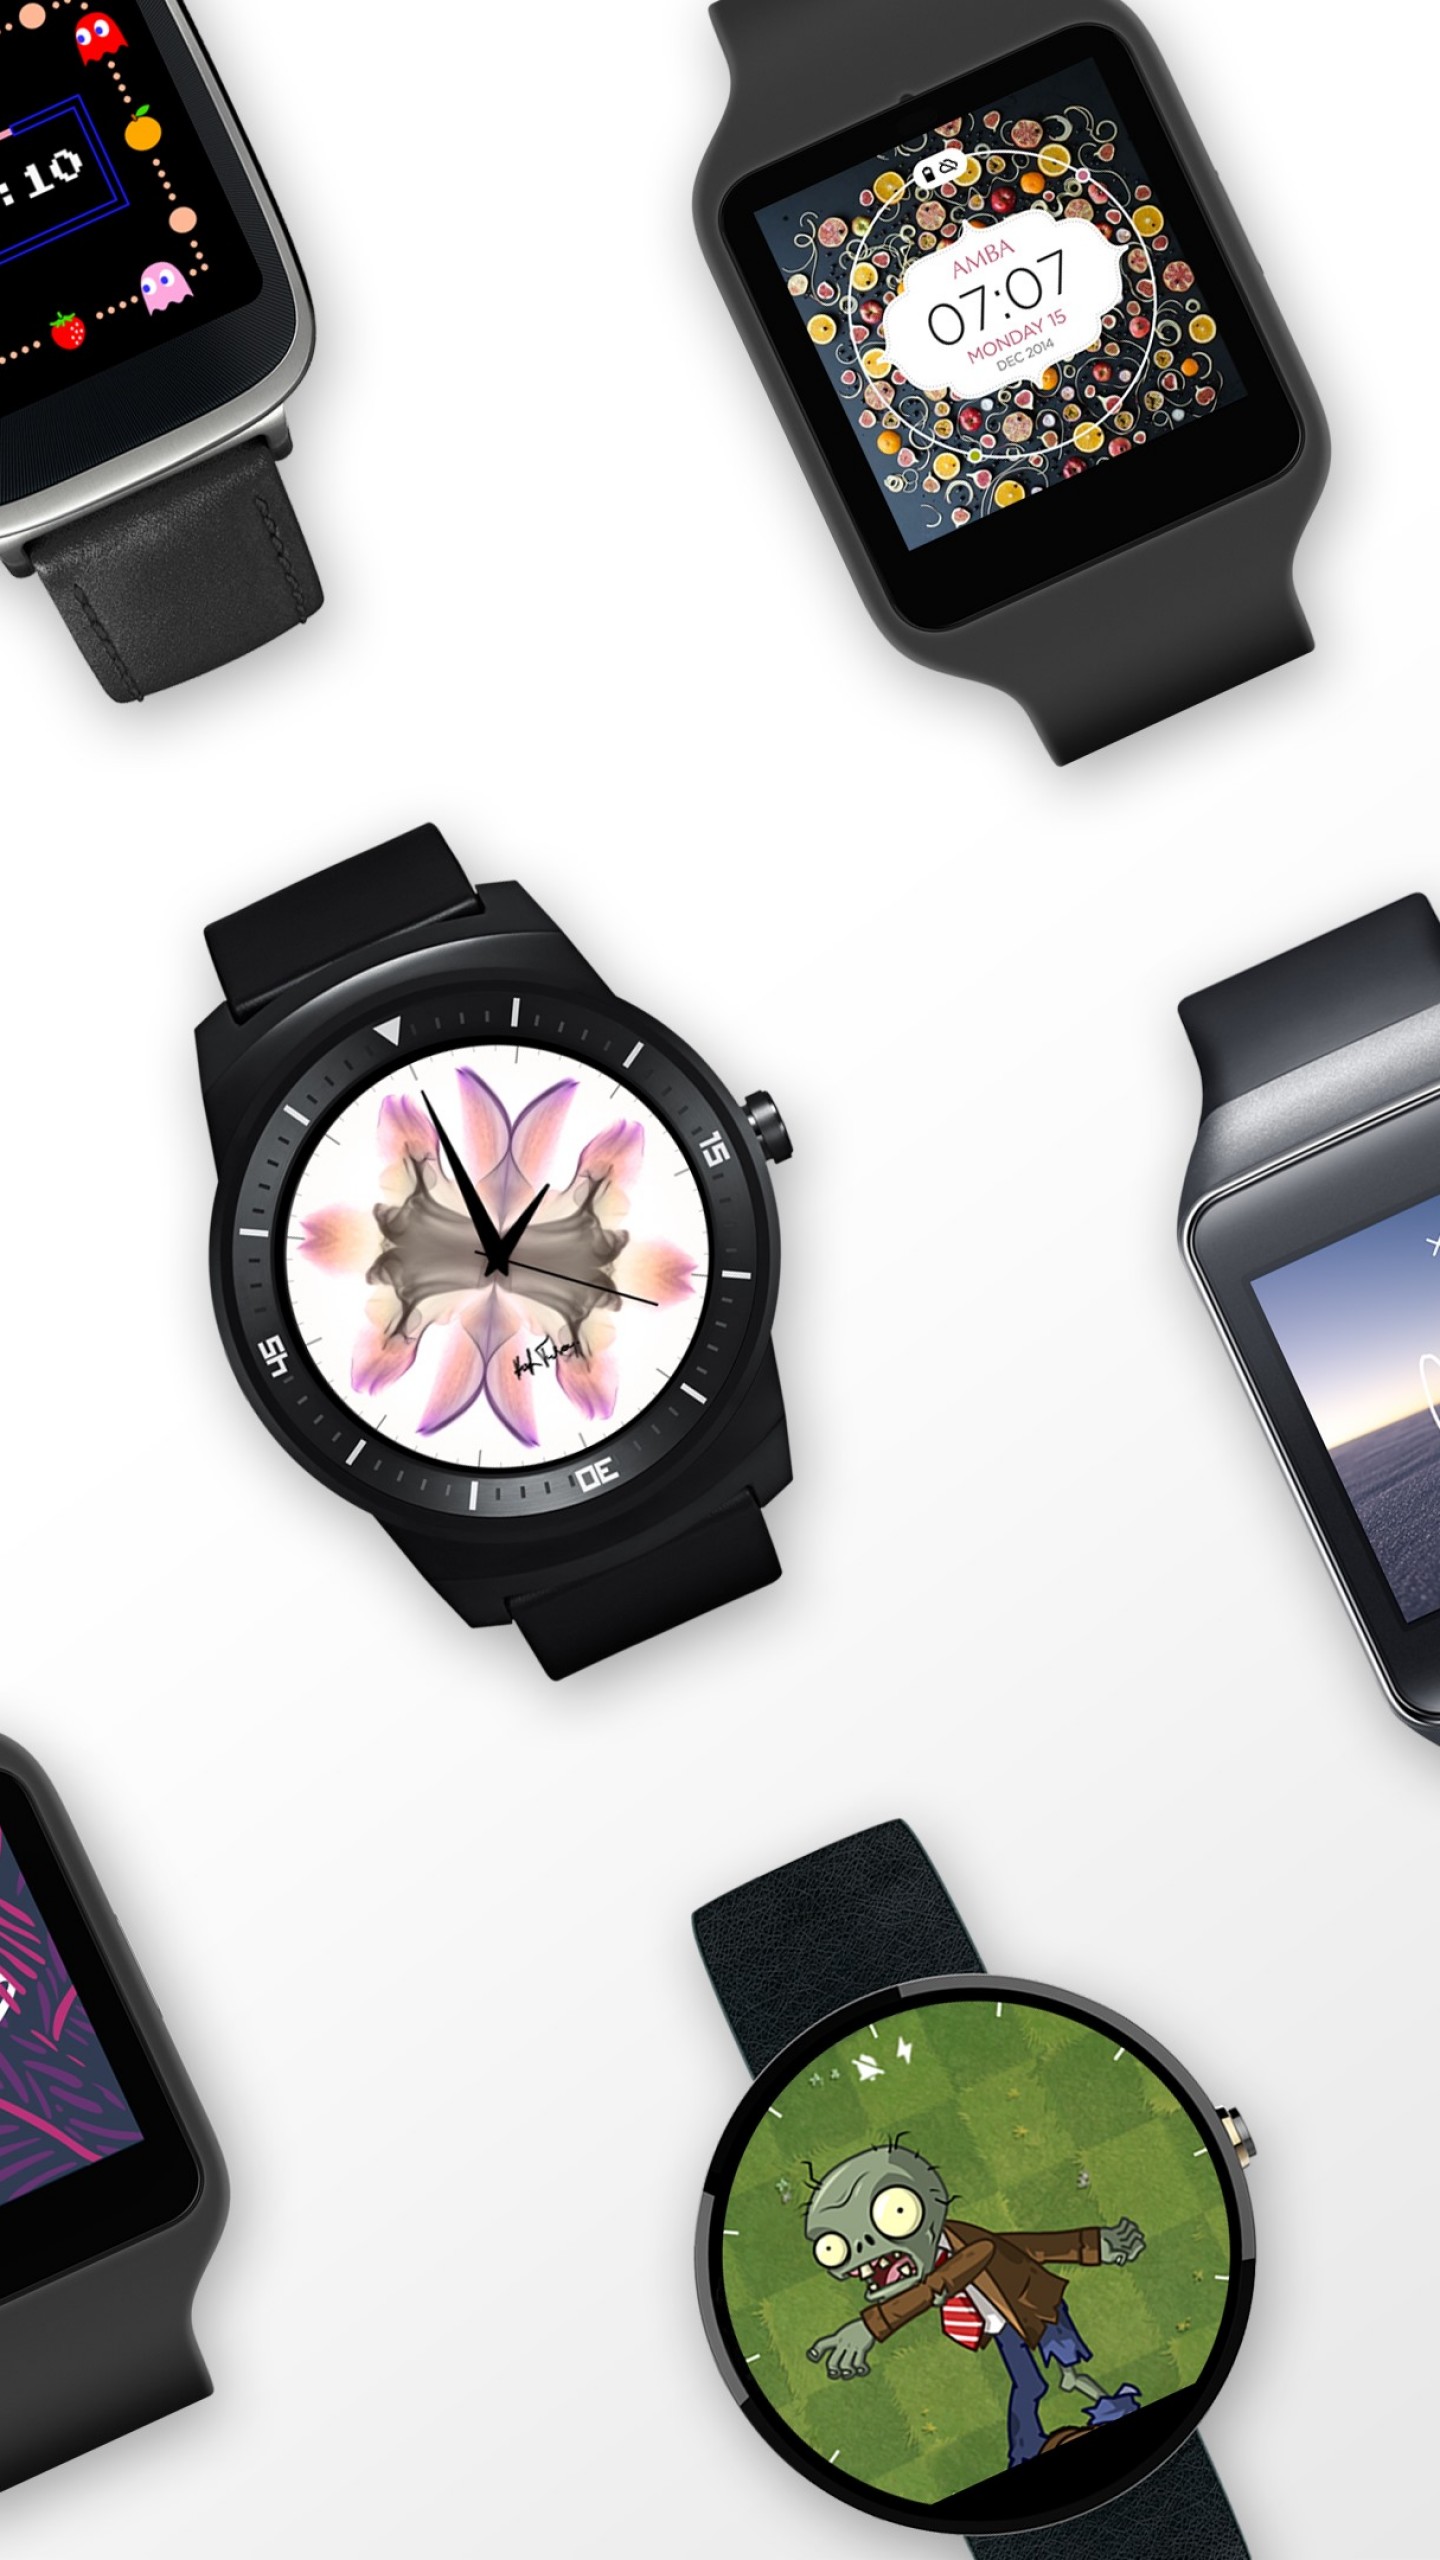 android wear壁紙,アナログ時計,見る,時計アクセサリー,ガジェット,技術